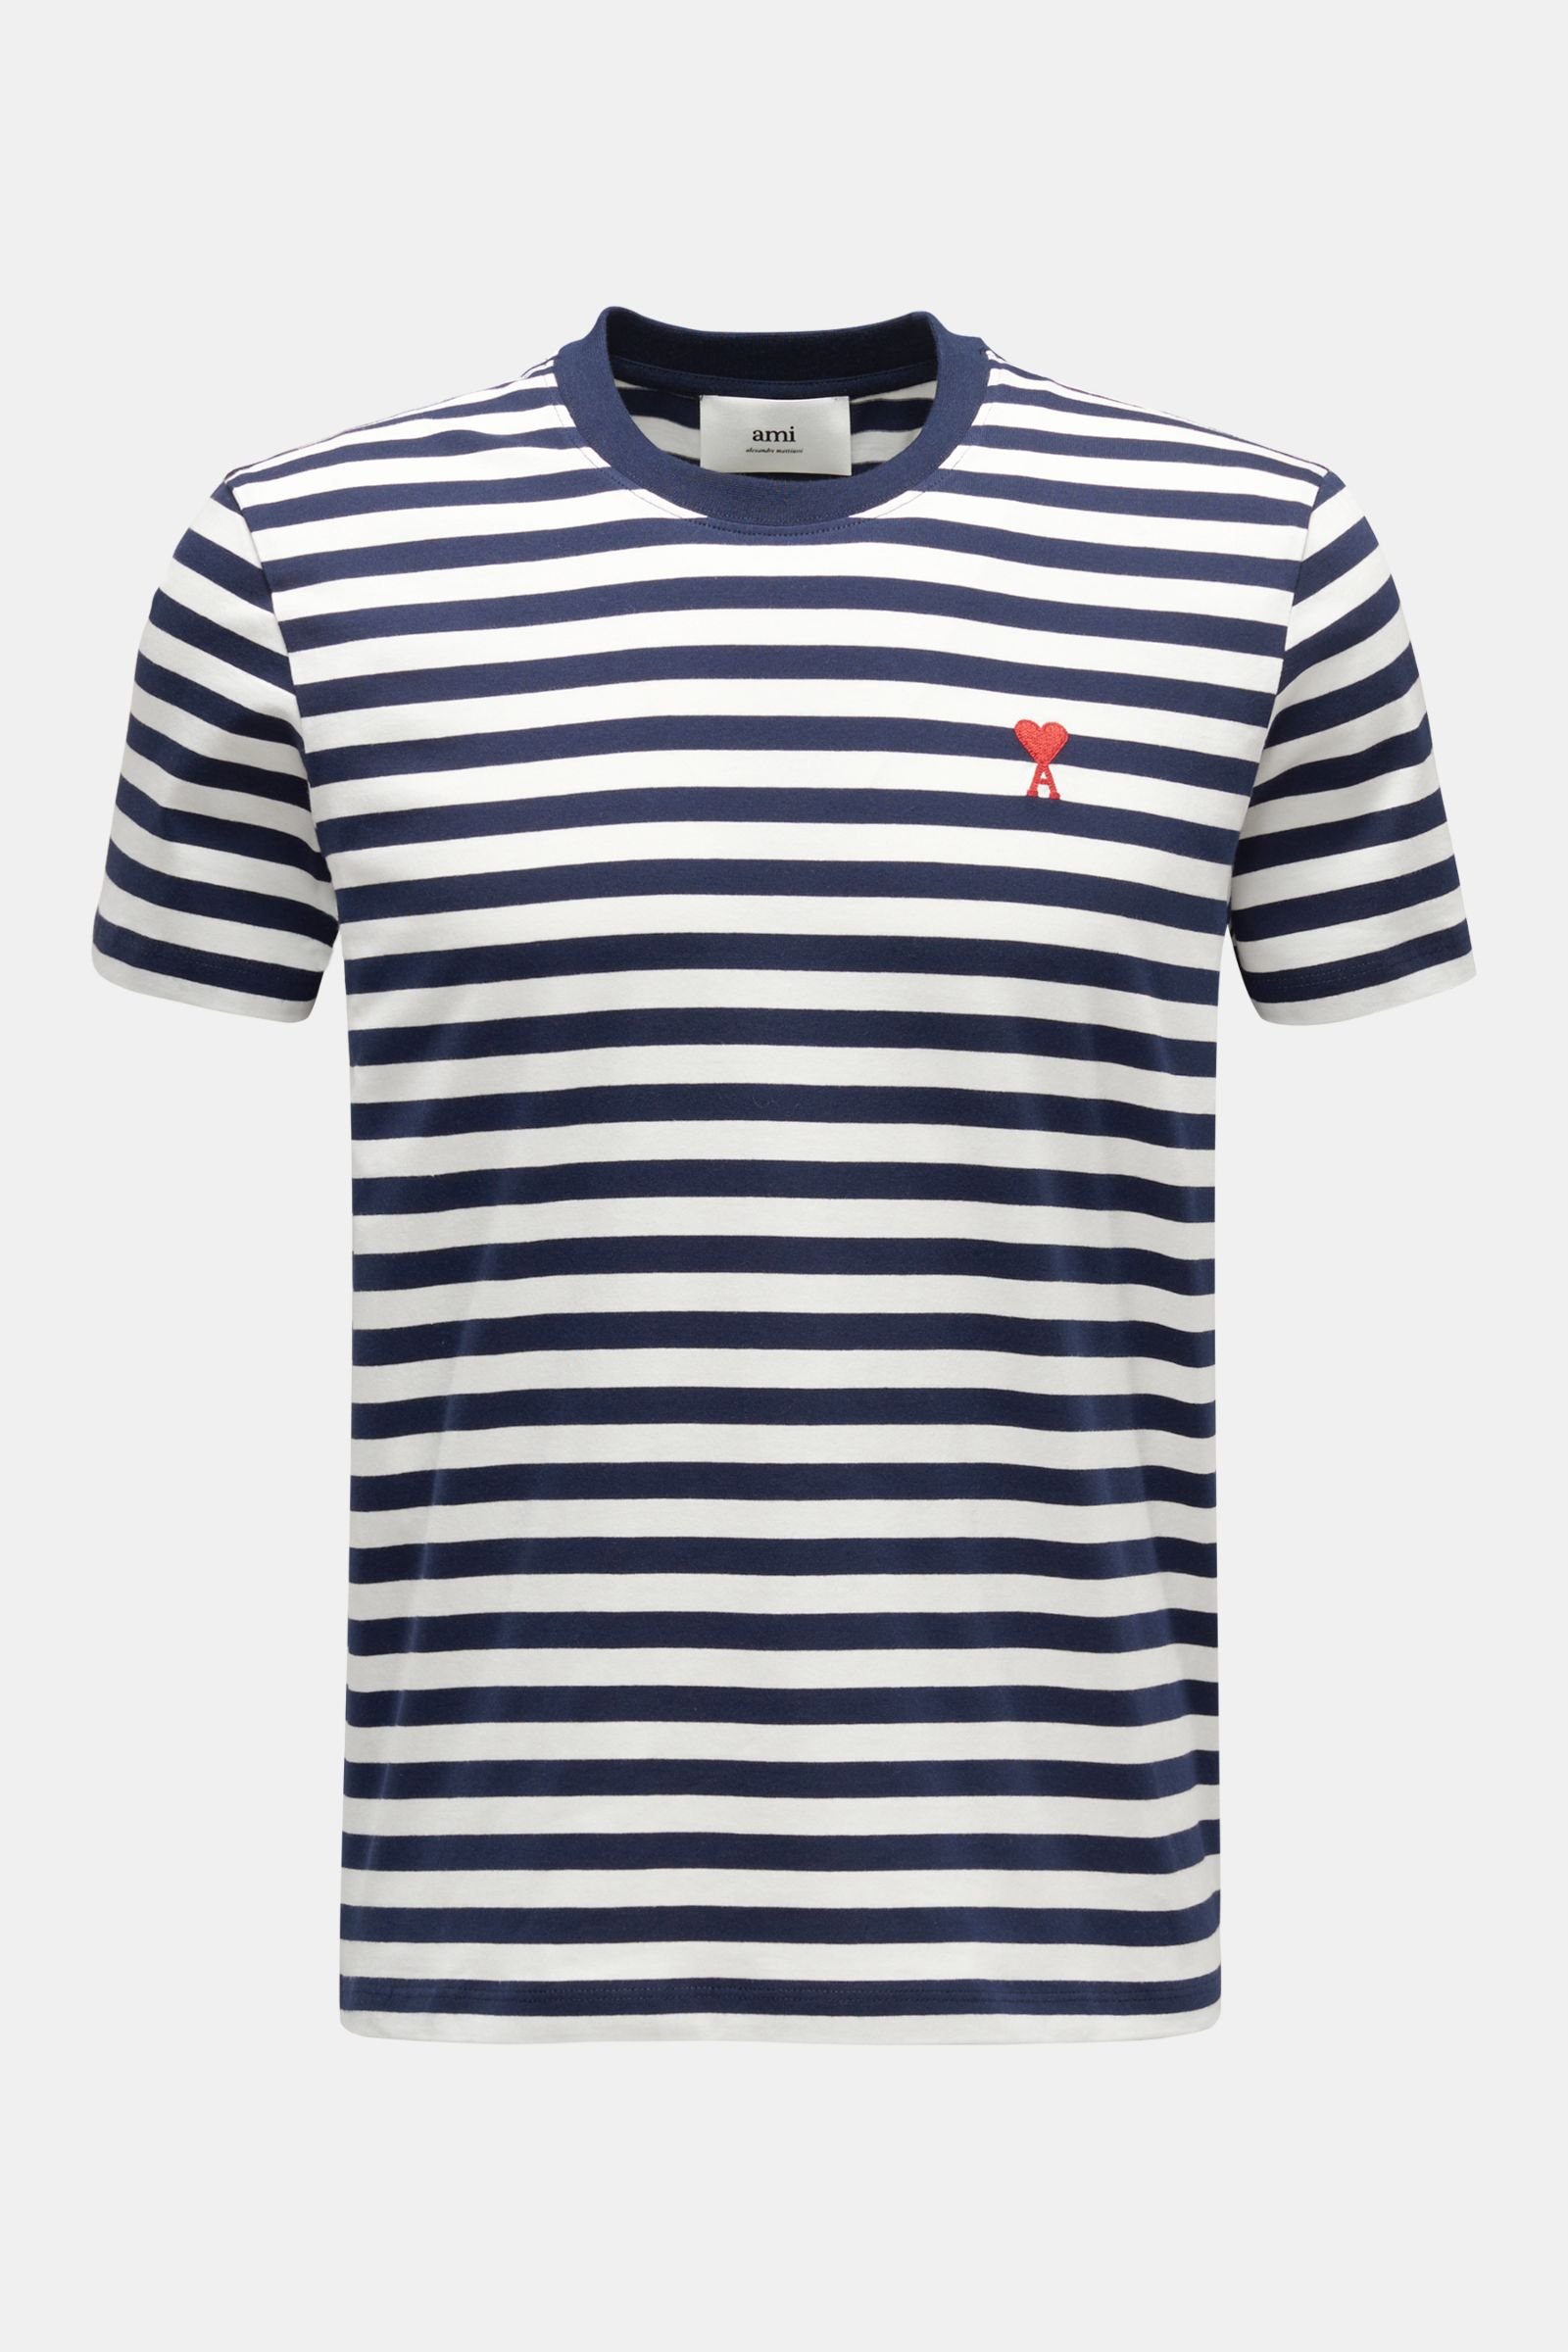 Crew neck T-shirt navy/white striped